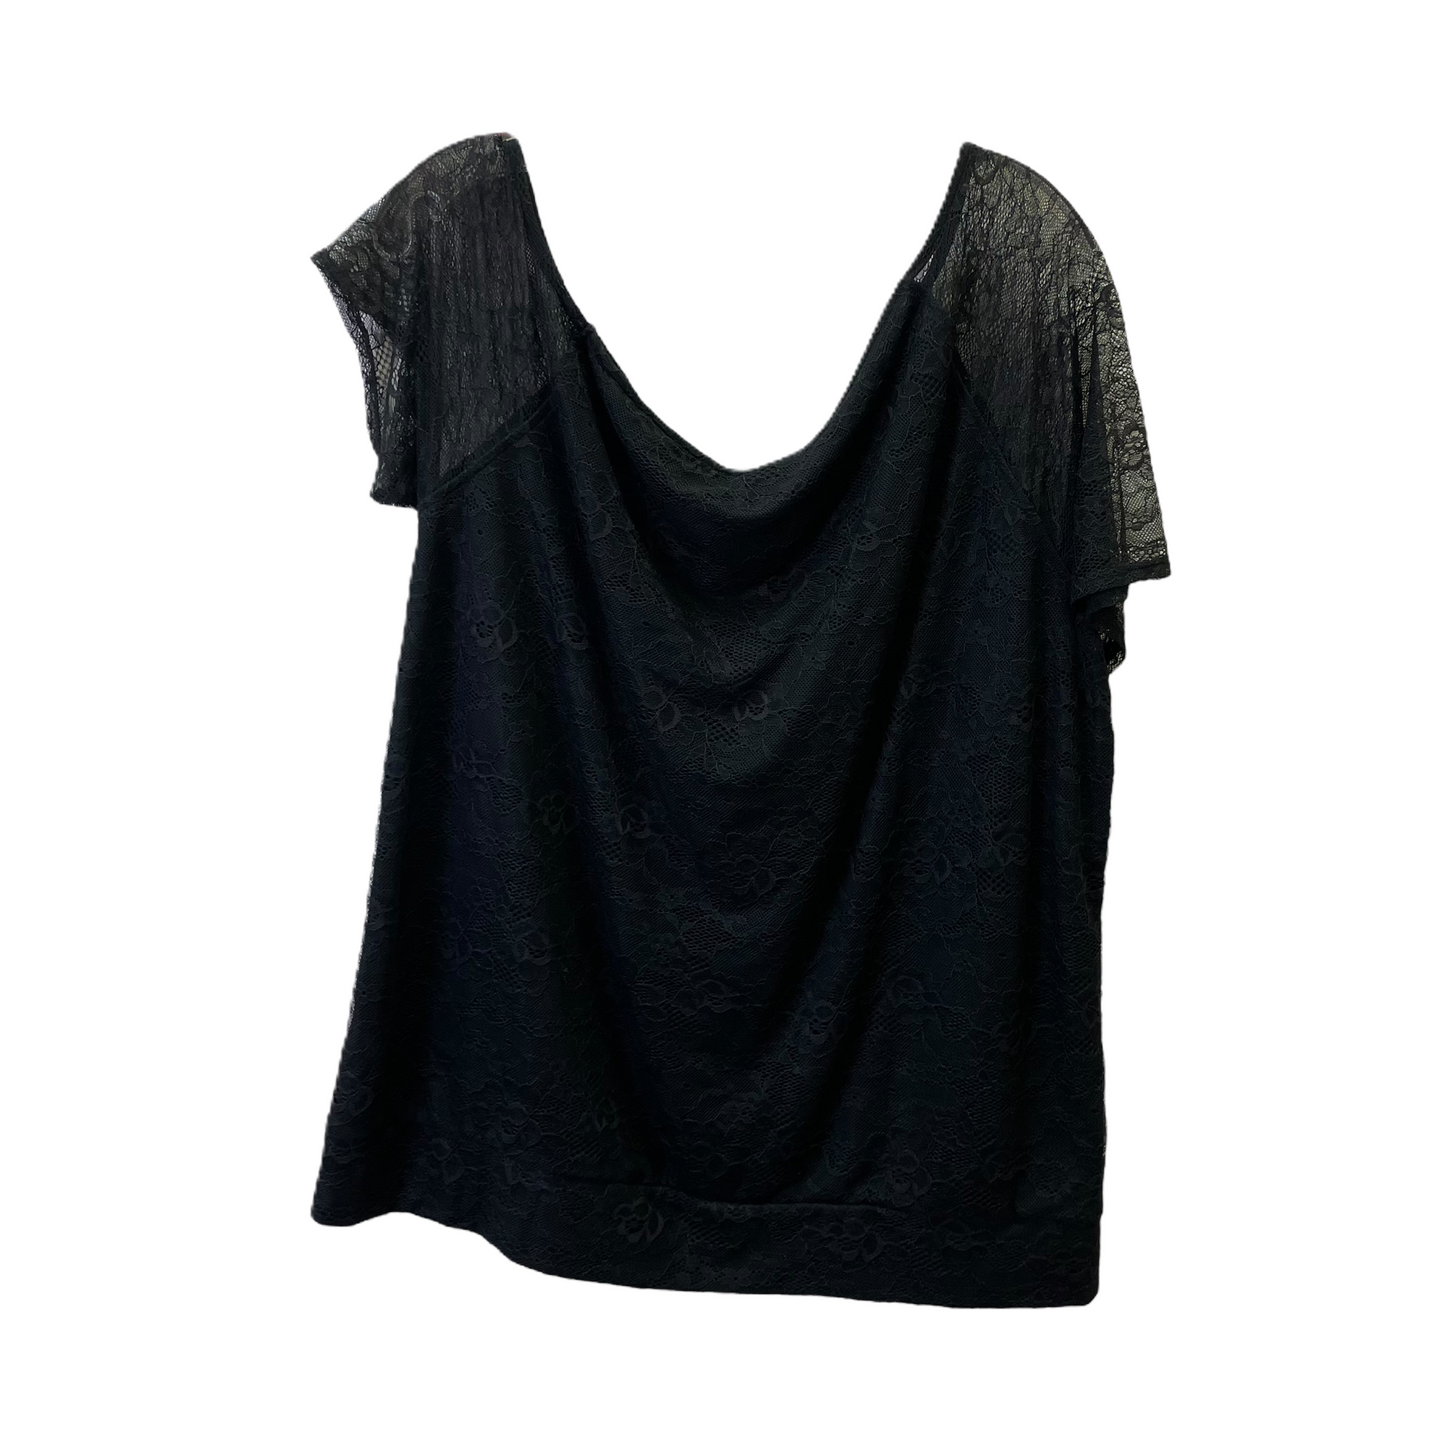 Black Top Short Sleeve By Torrid, Size: 1x